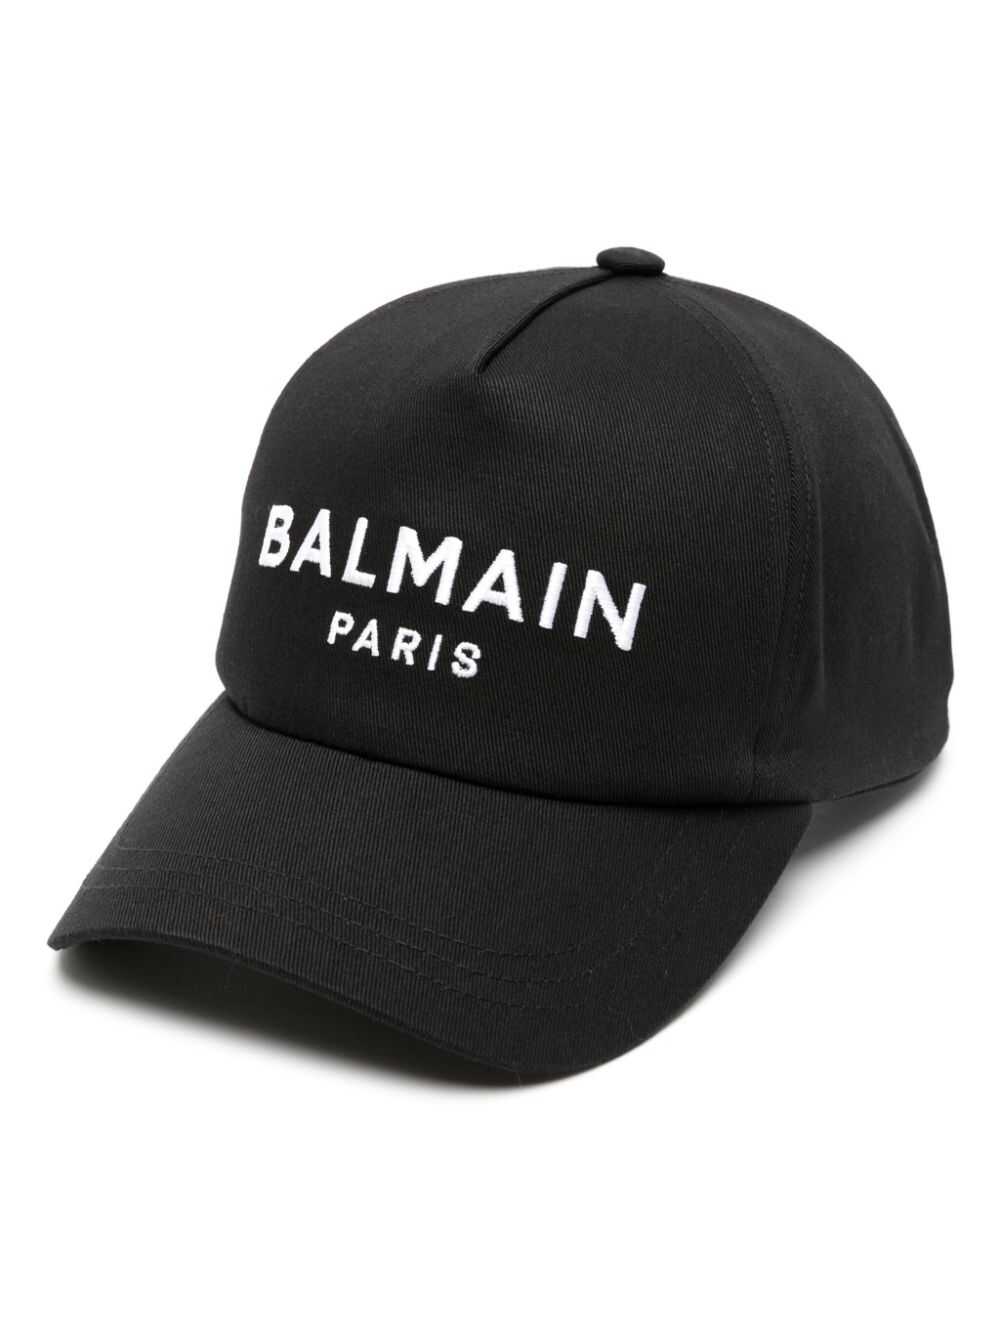 Balmain Balmain Hats Black Black